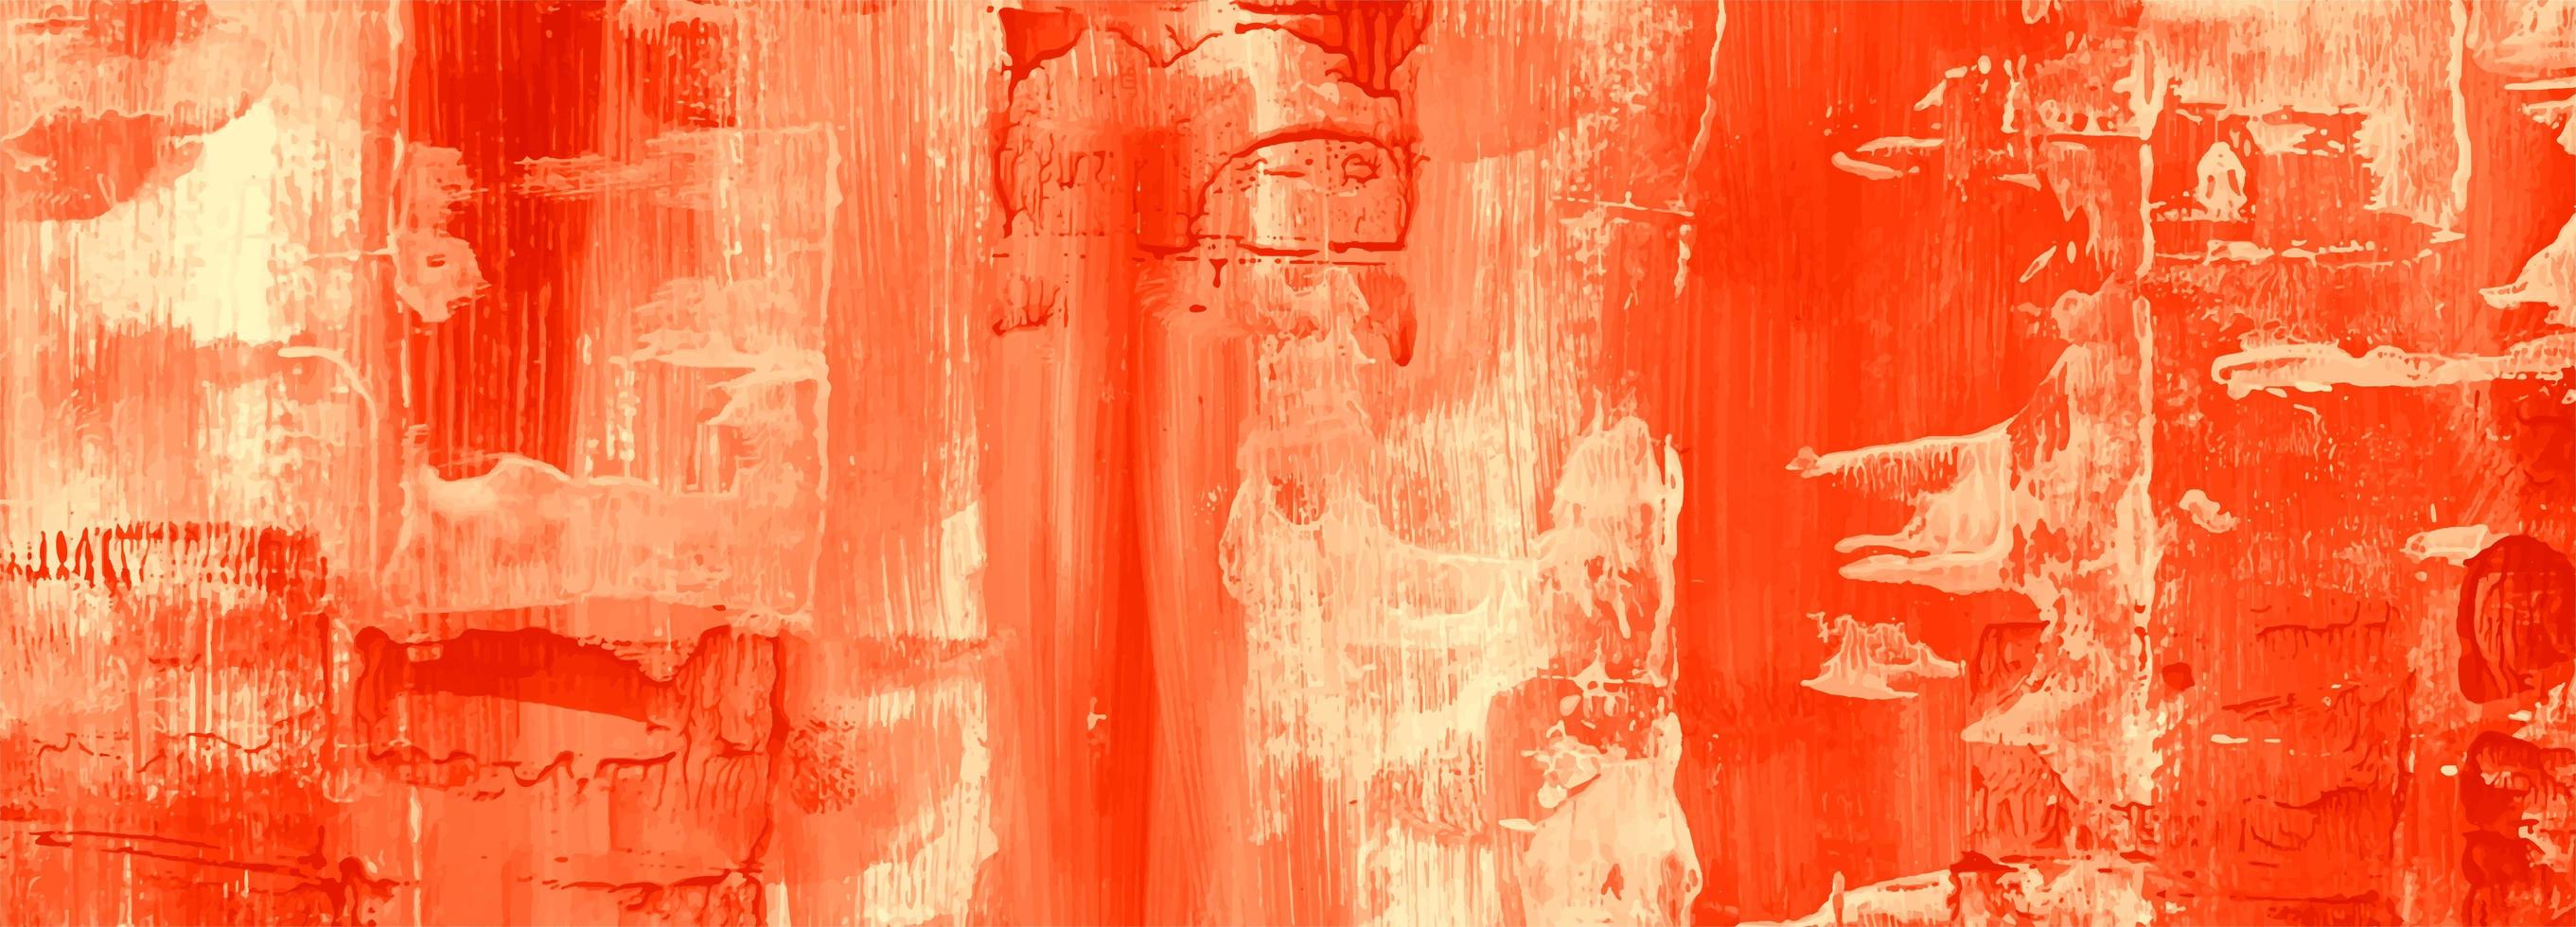 abstract oranje olieverf textuur banner achtergrond vector